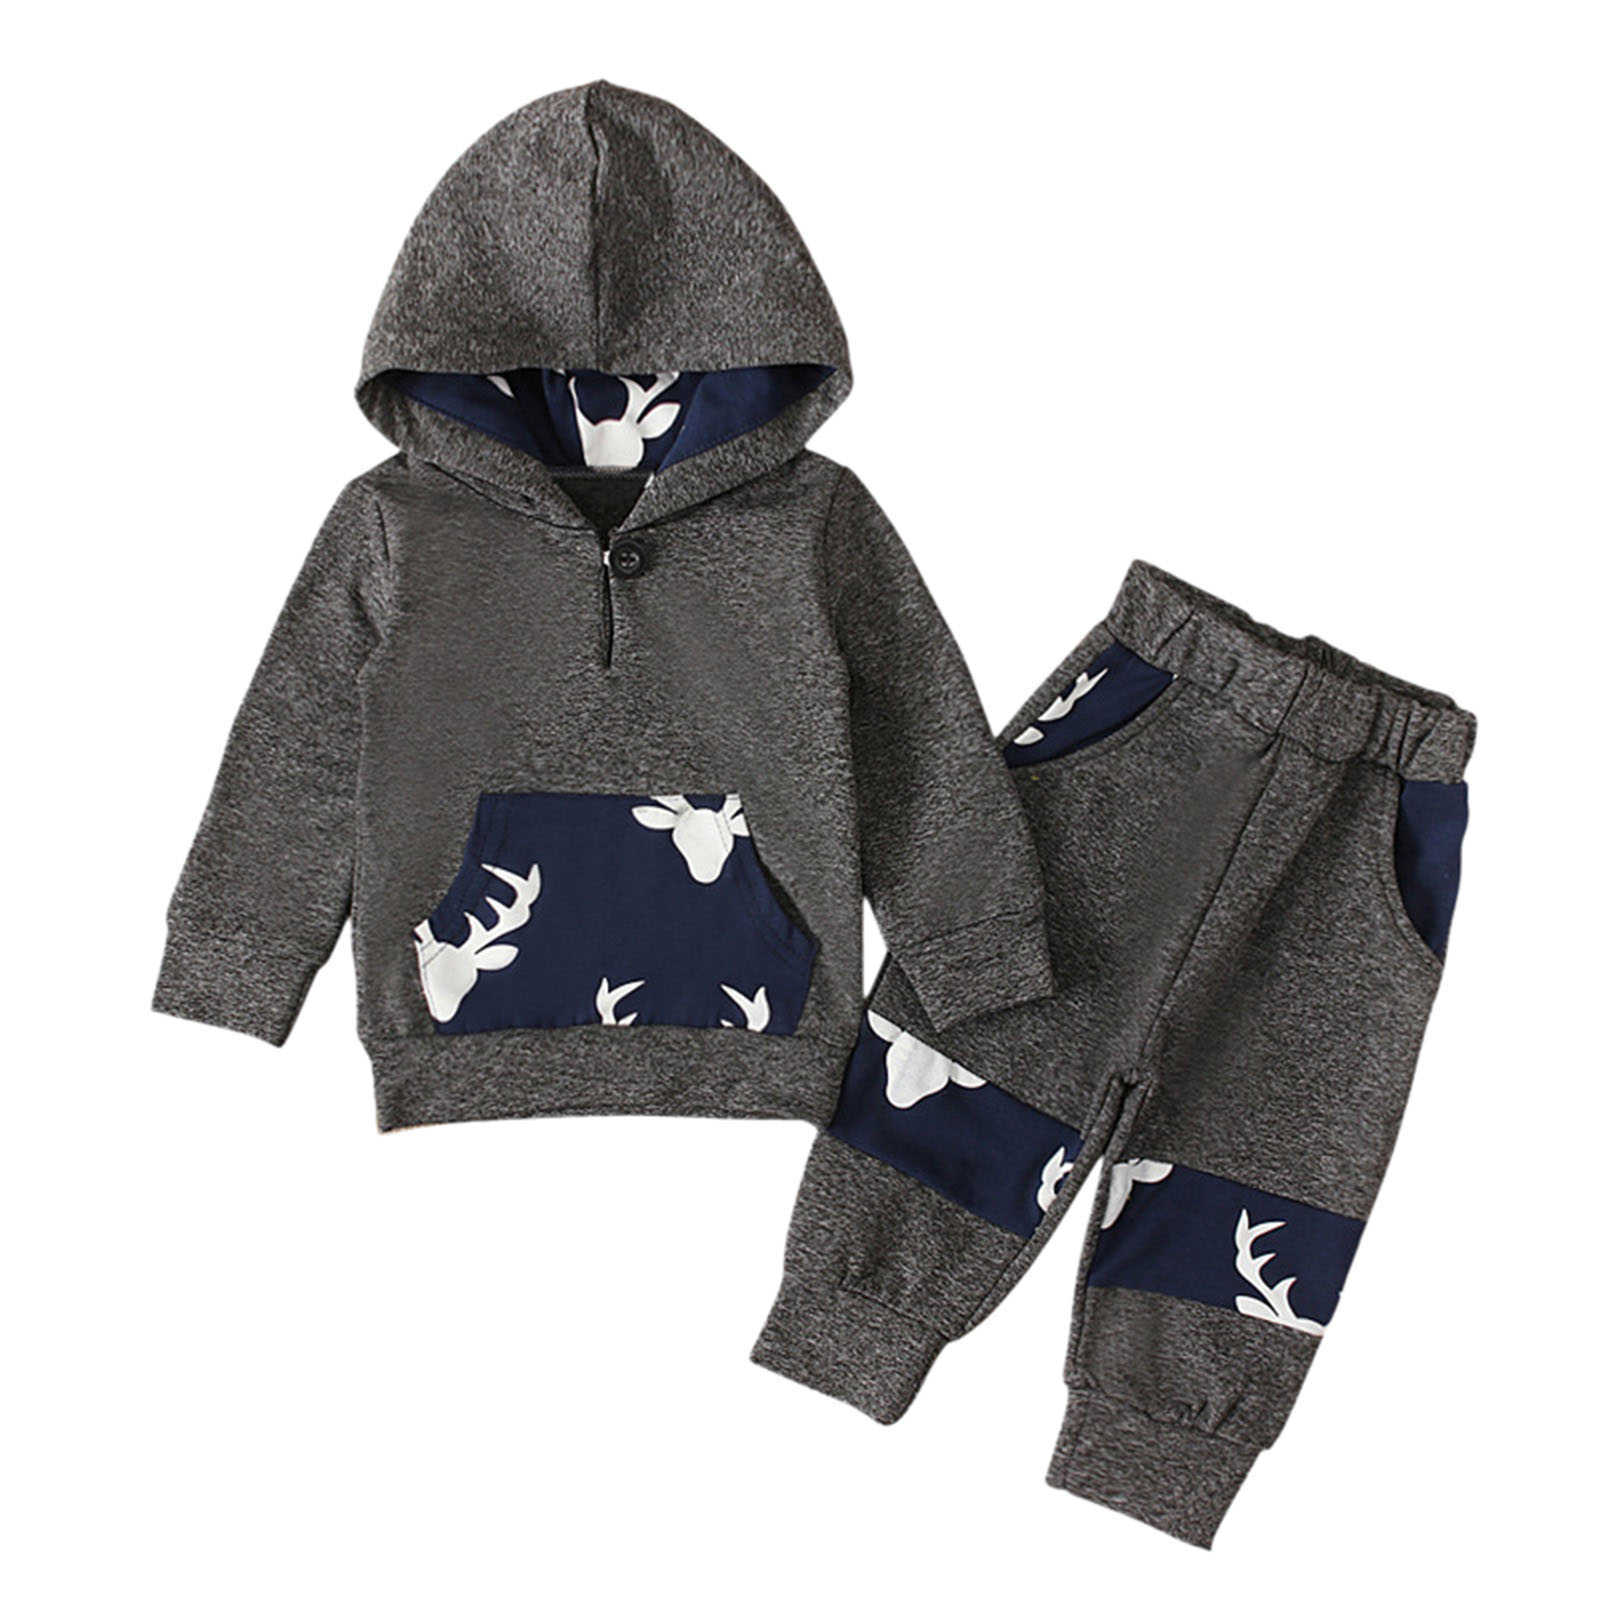 Kledingsets Toddler Boys Winter Lange Mouw Blue Deer Prints Tops broek 2 stks Outfits Infant Christmas Outfit Boy 6t Kerstmis outfit Boy W0222